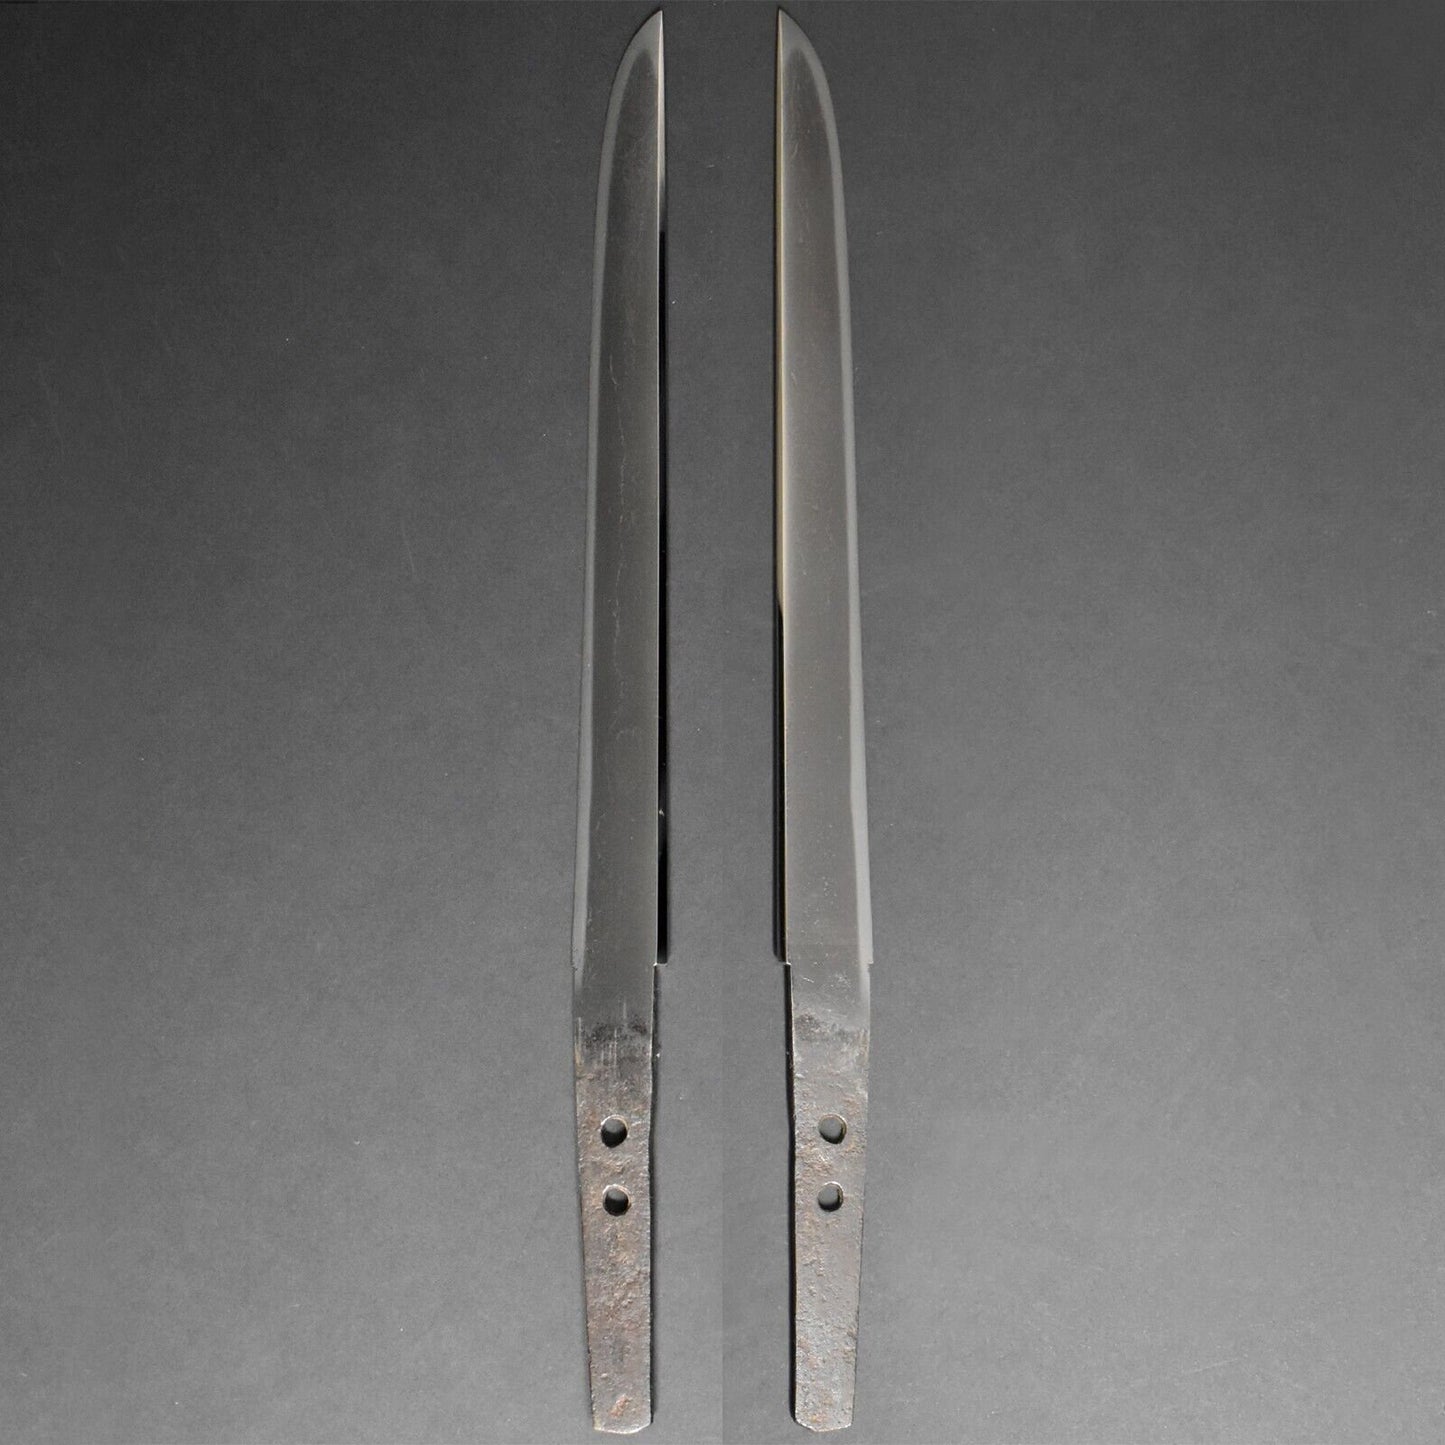 Collectible Genuine Unique Ancient Katana Sword Samurai Asian Tanto Ryoukai Tamahagane Material Vintage Weapon Muromachi Era Period Original.